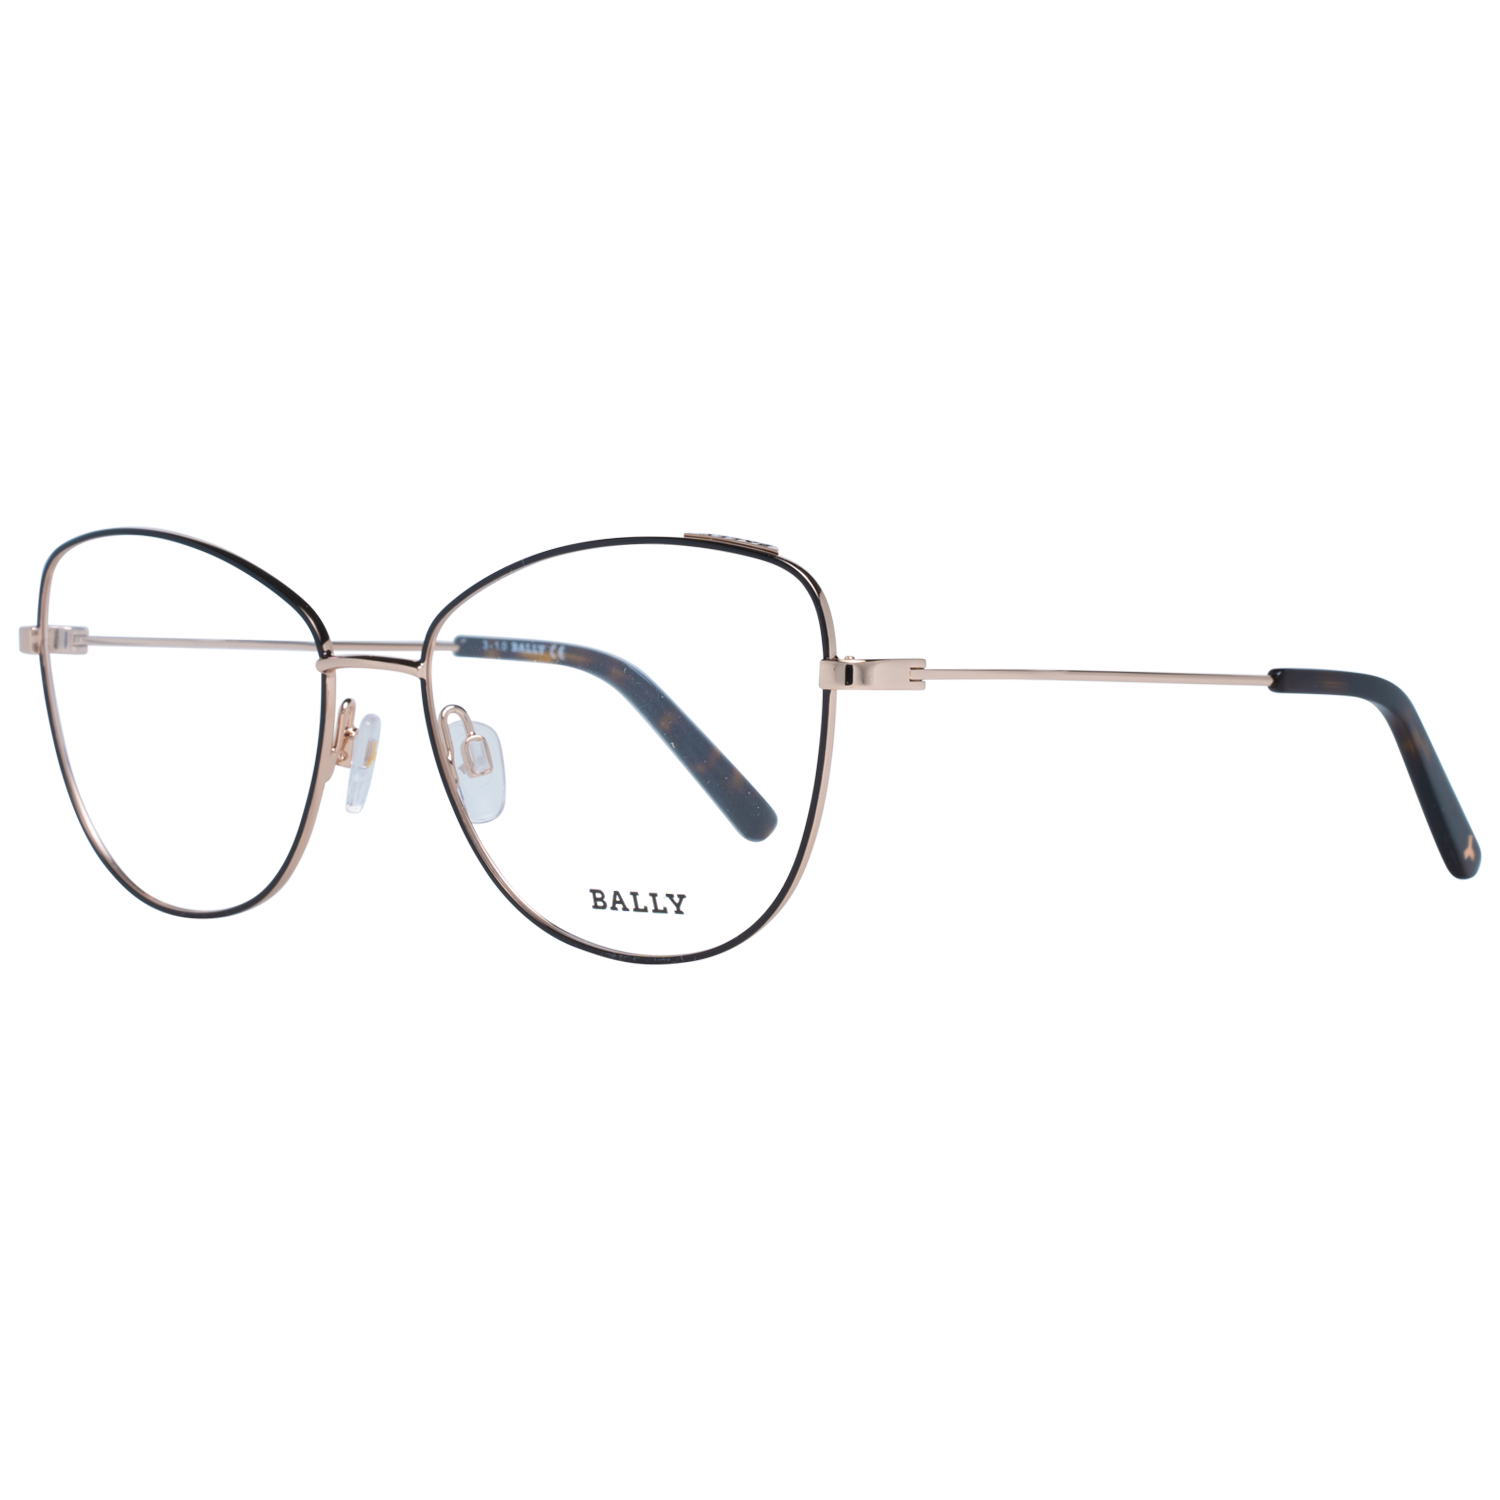 Bally Optical Frame Bally Eyeglasses Frames BY5022 005 56 Eyeglasses Eyewear UK USA Australia 